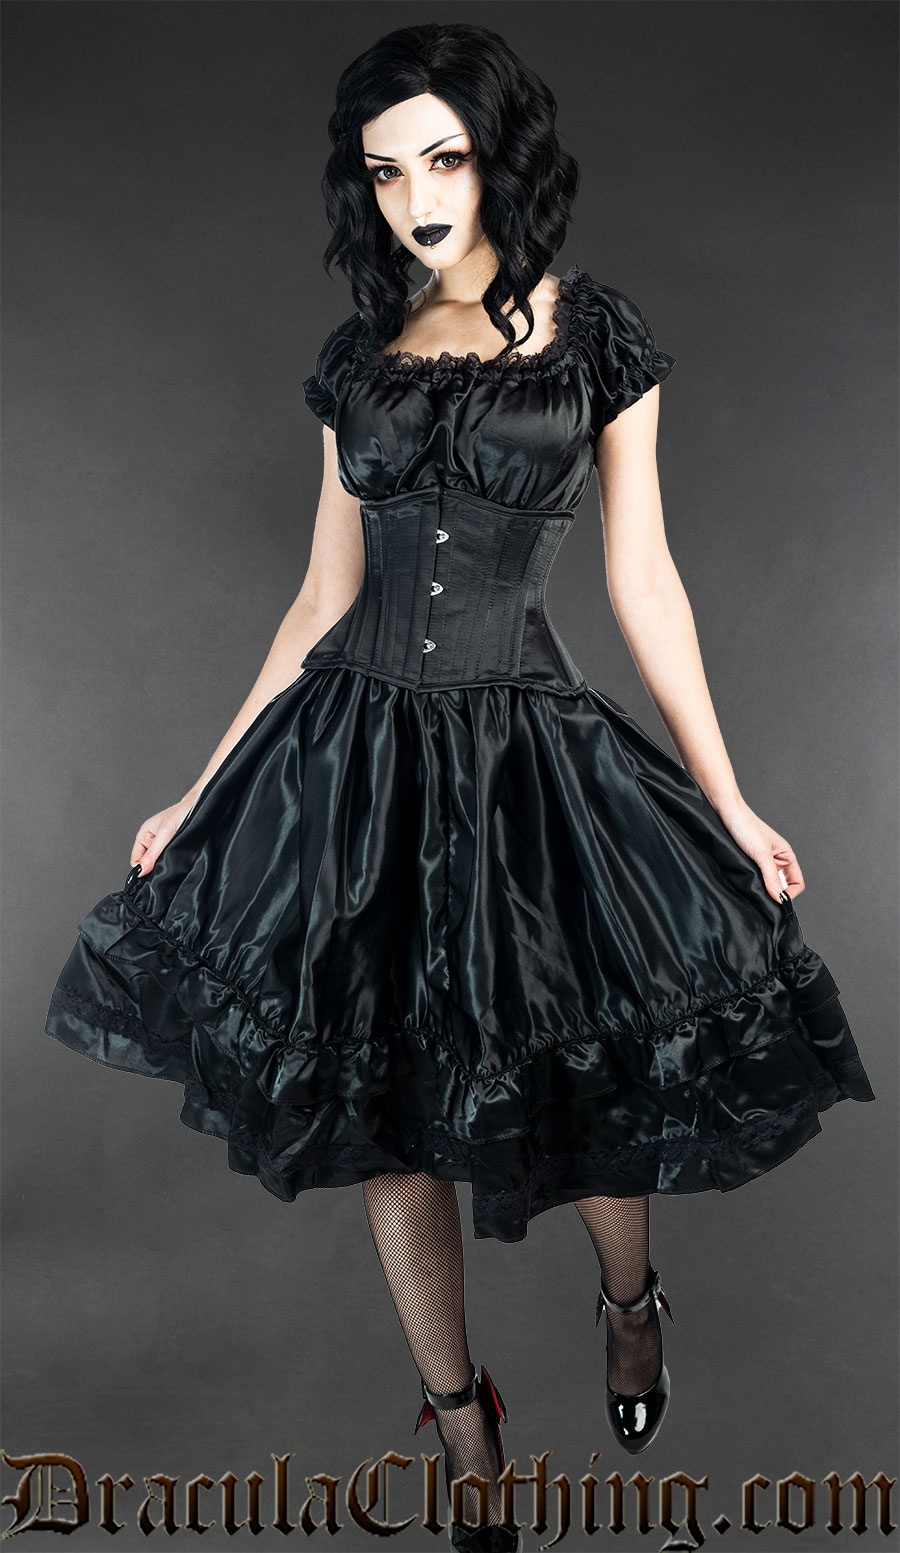 Black Satin Gothabilly Dress